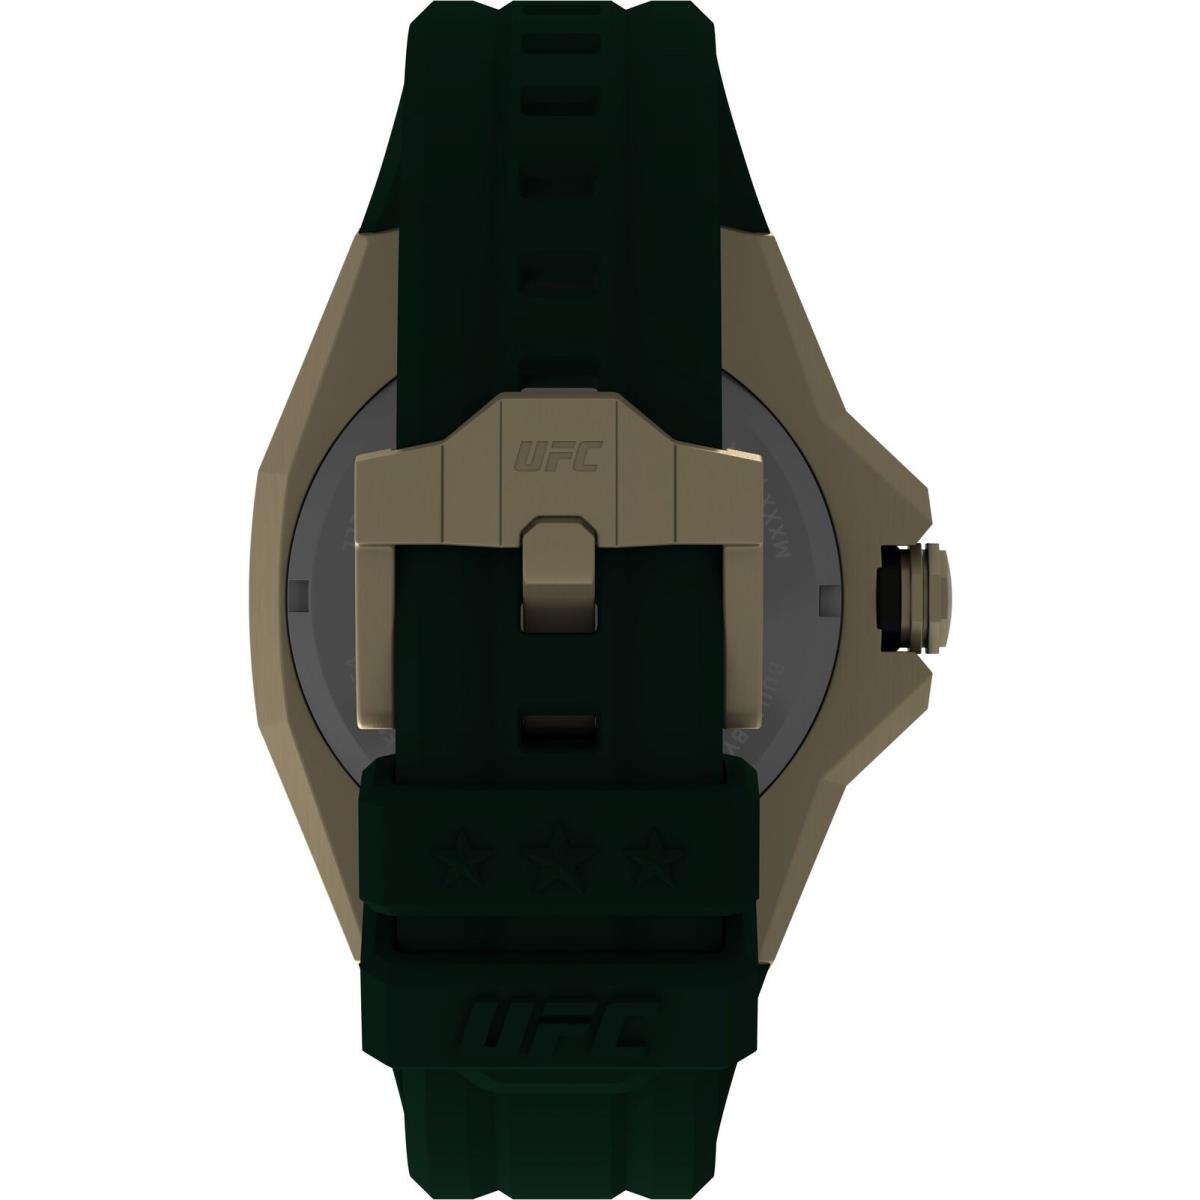 Timex Men`s Ufc Street 44mm Quartz Watch TW2V90100JR - Dial: Green, Band: Green, Other Dial: Green